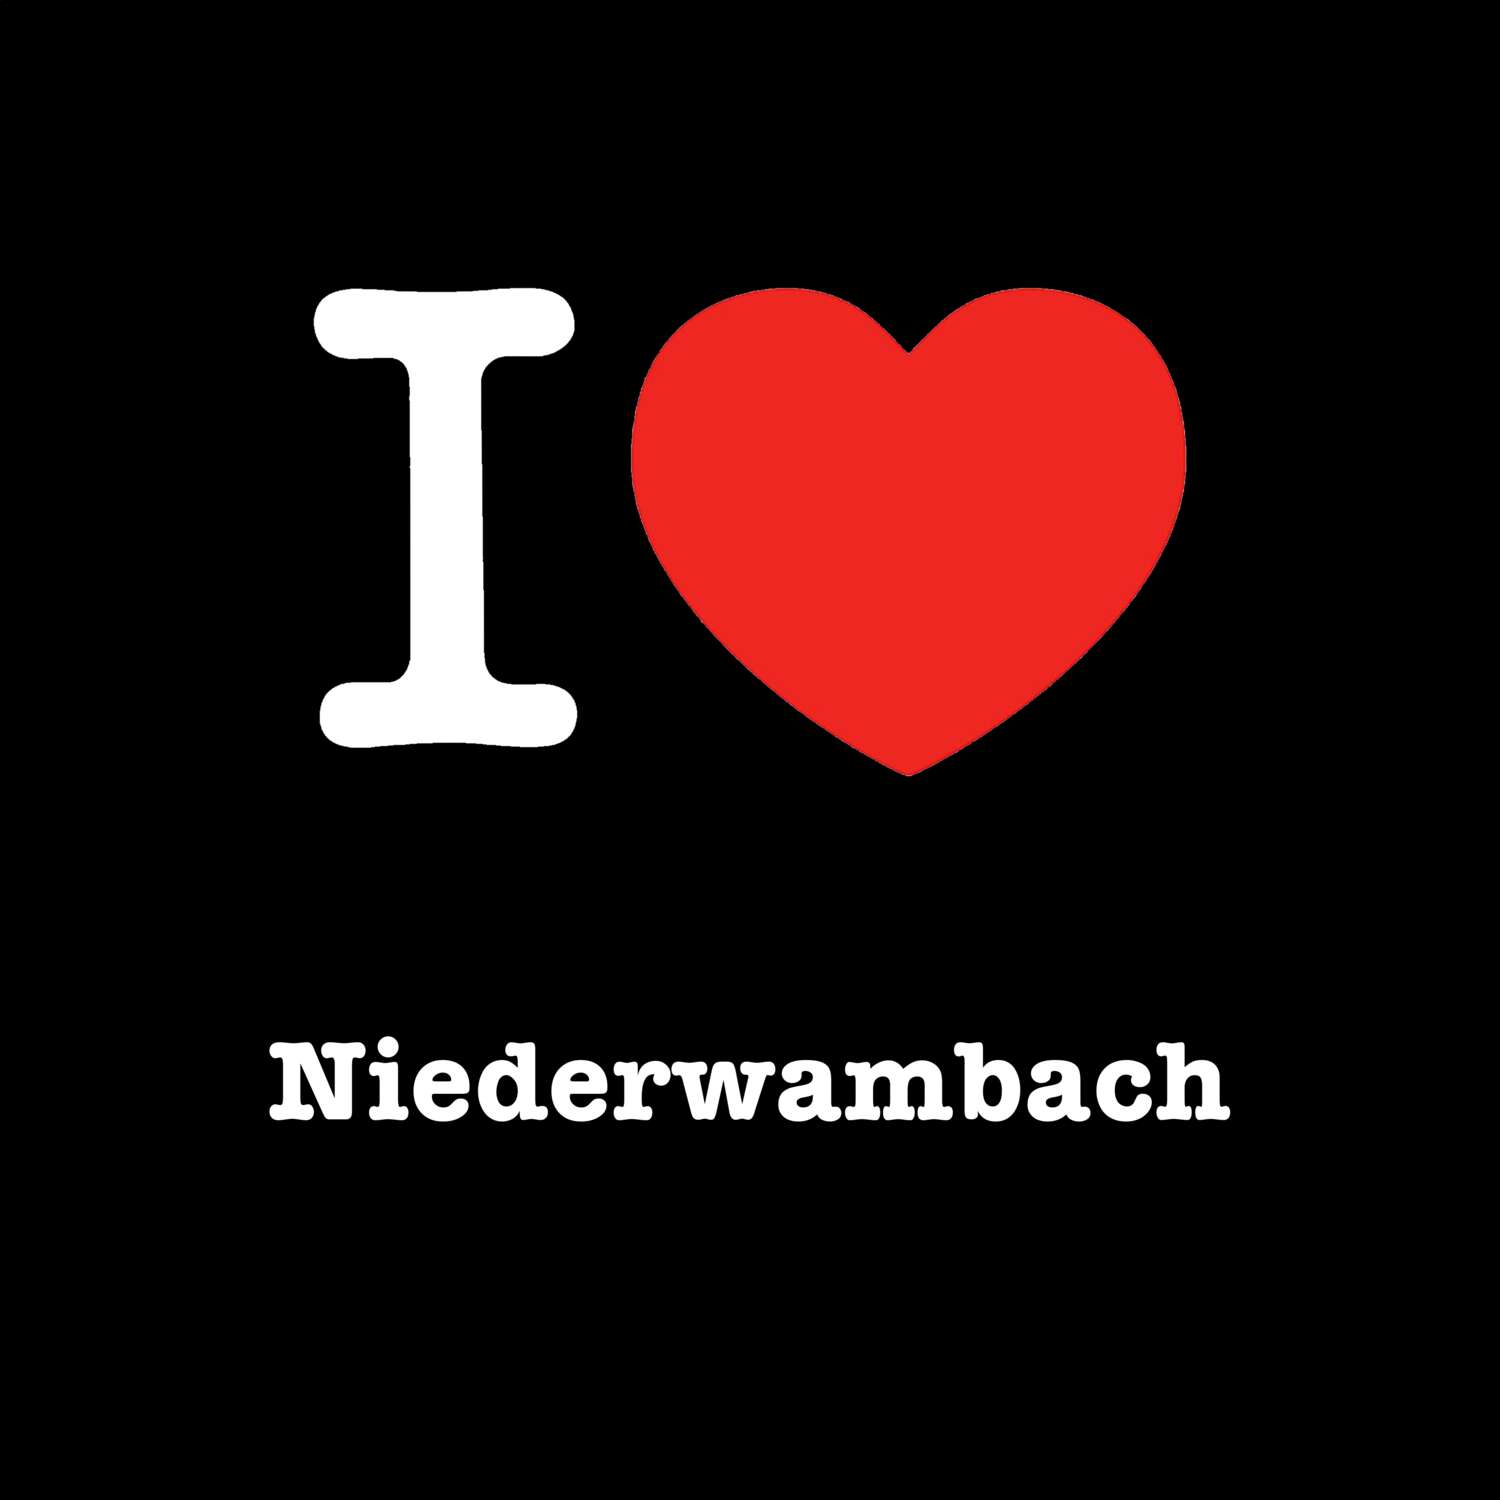 Niederwambach T-Shirt »I love«